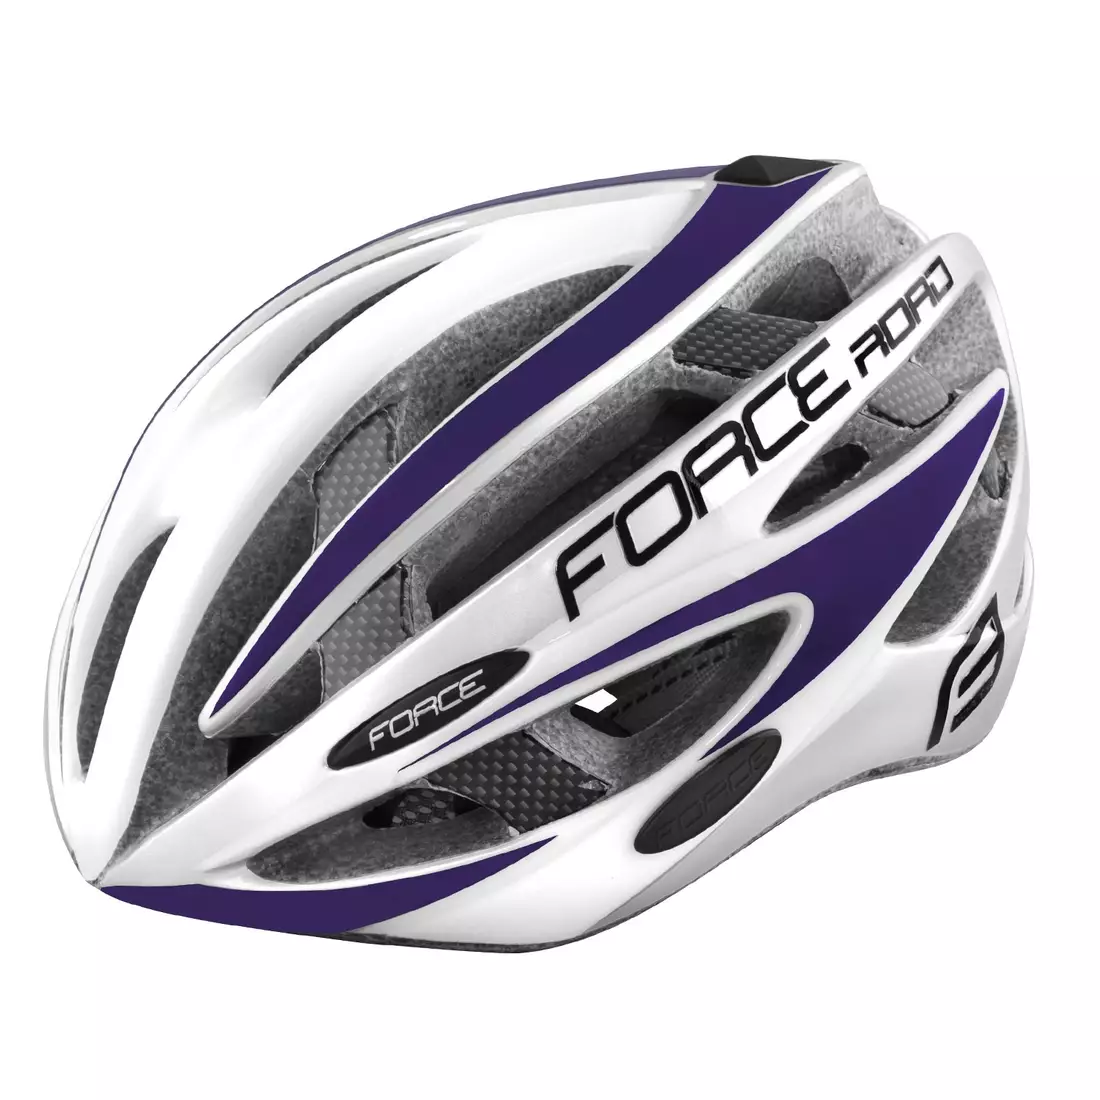 FORCE kask rowerowy ROAD white/purple 9026195